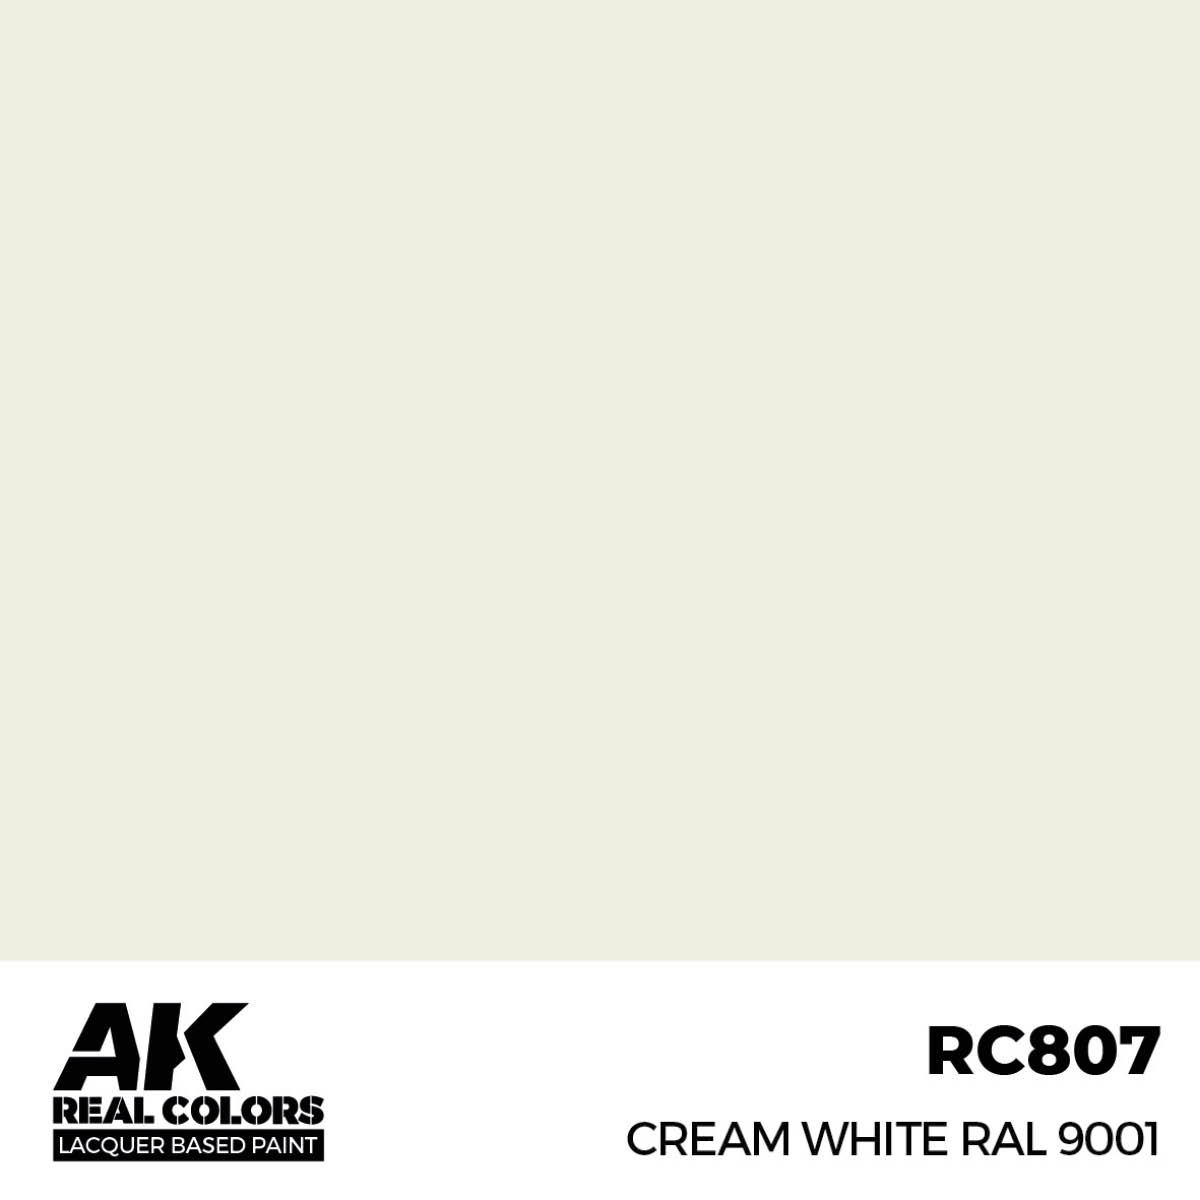 Cream White RAL 9001